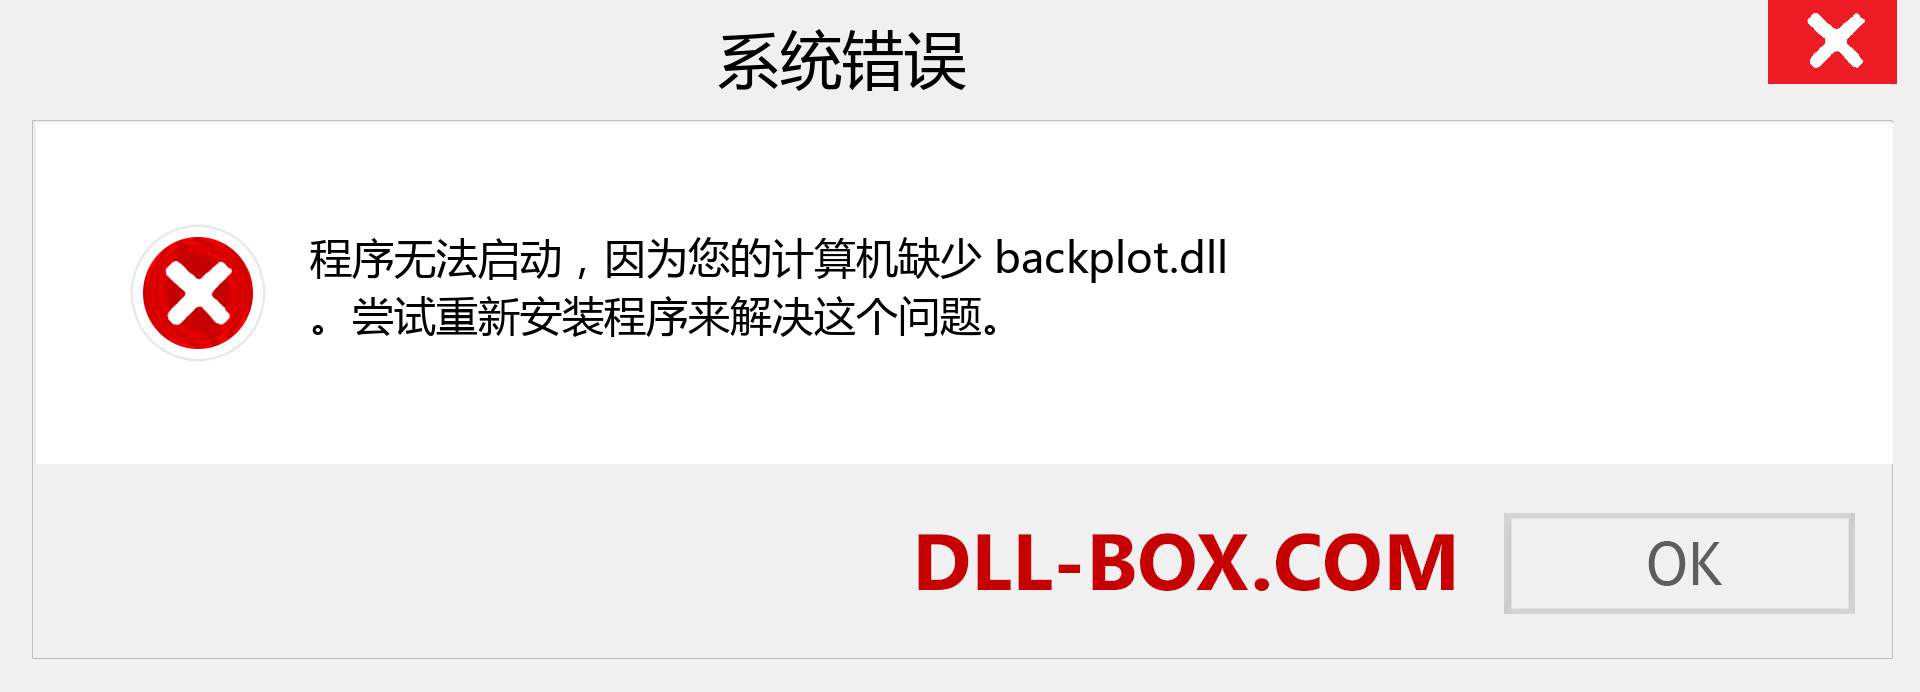 backplot.dll 文件丢失？。 适用于 Windows 7、8、10 的下载 - 修复 Windows、照片、图像上的 backplot dll 丢失错误